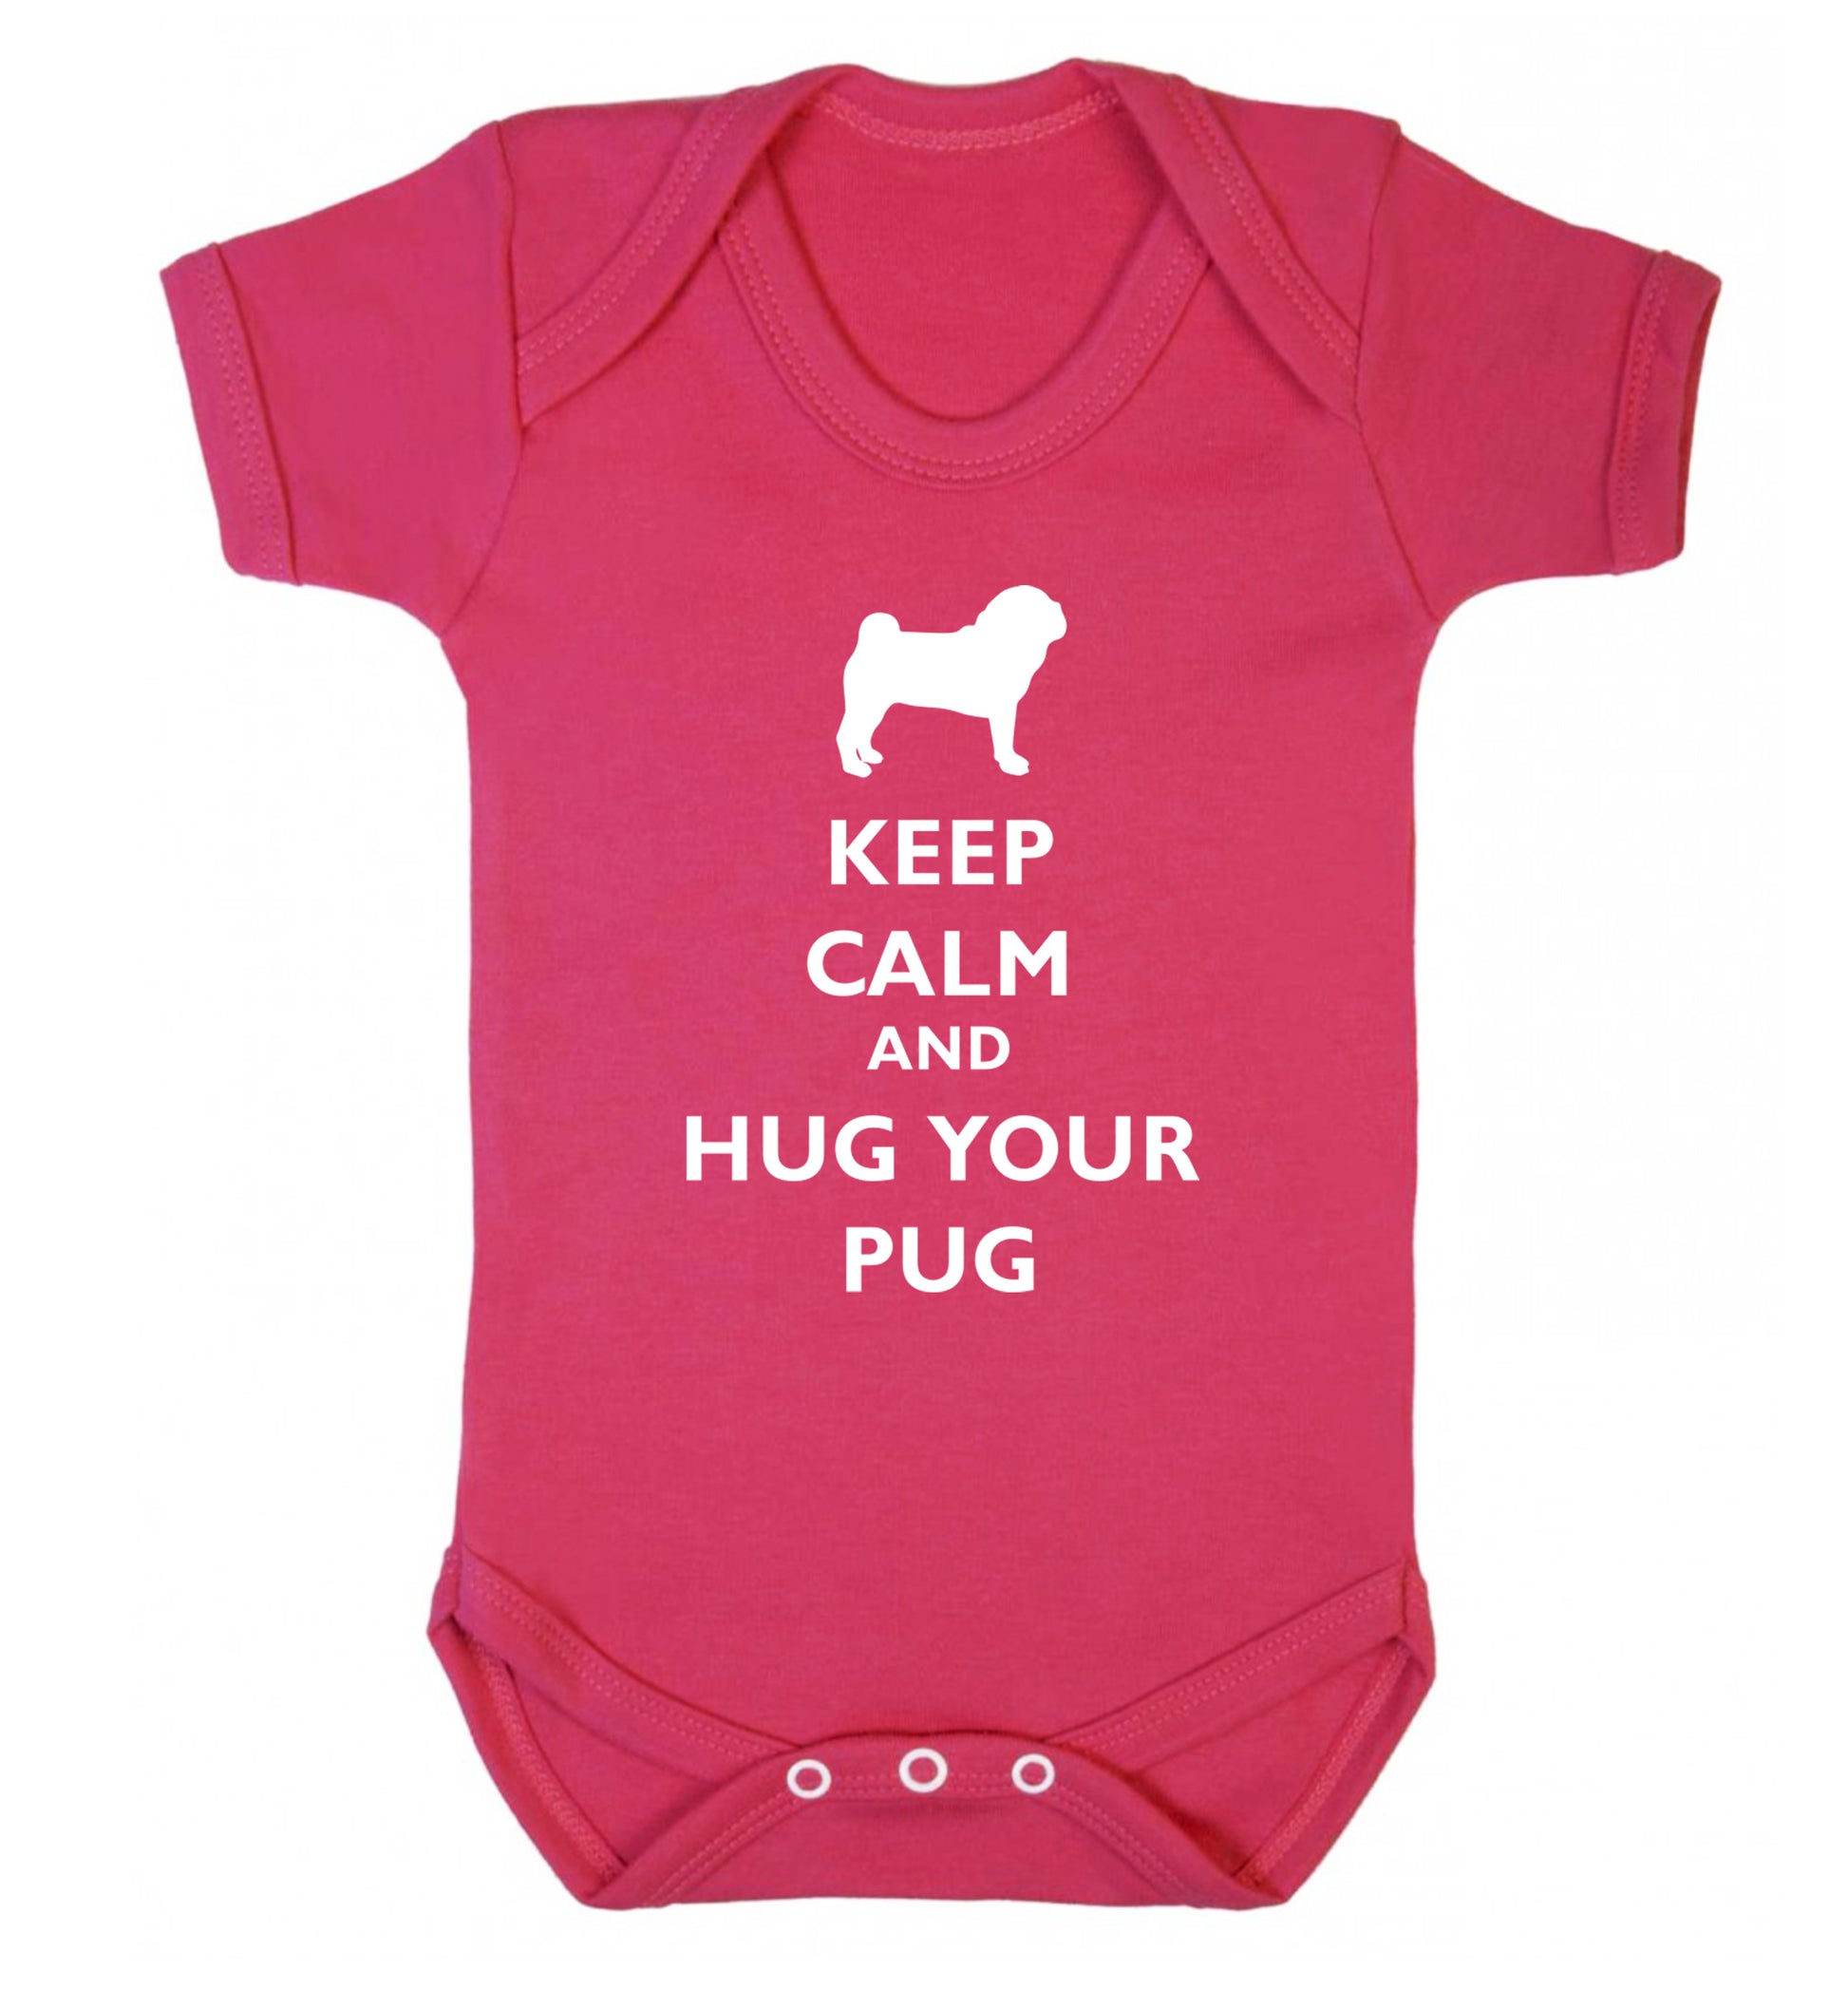 Keep calm and hug your pug Baby Vest dark pink 18-24 months